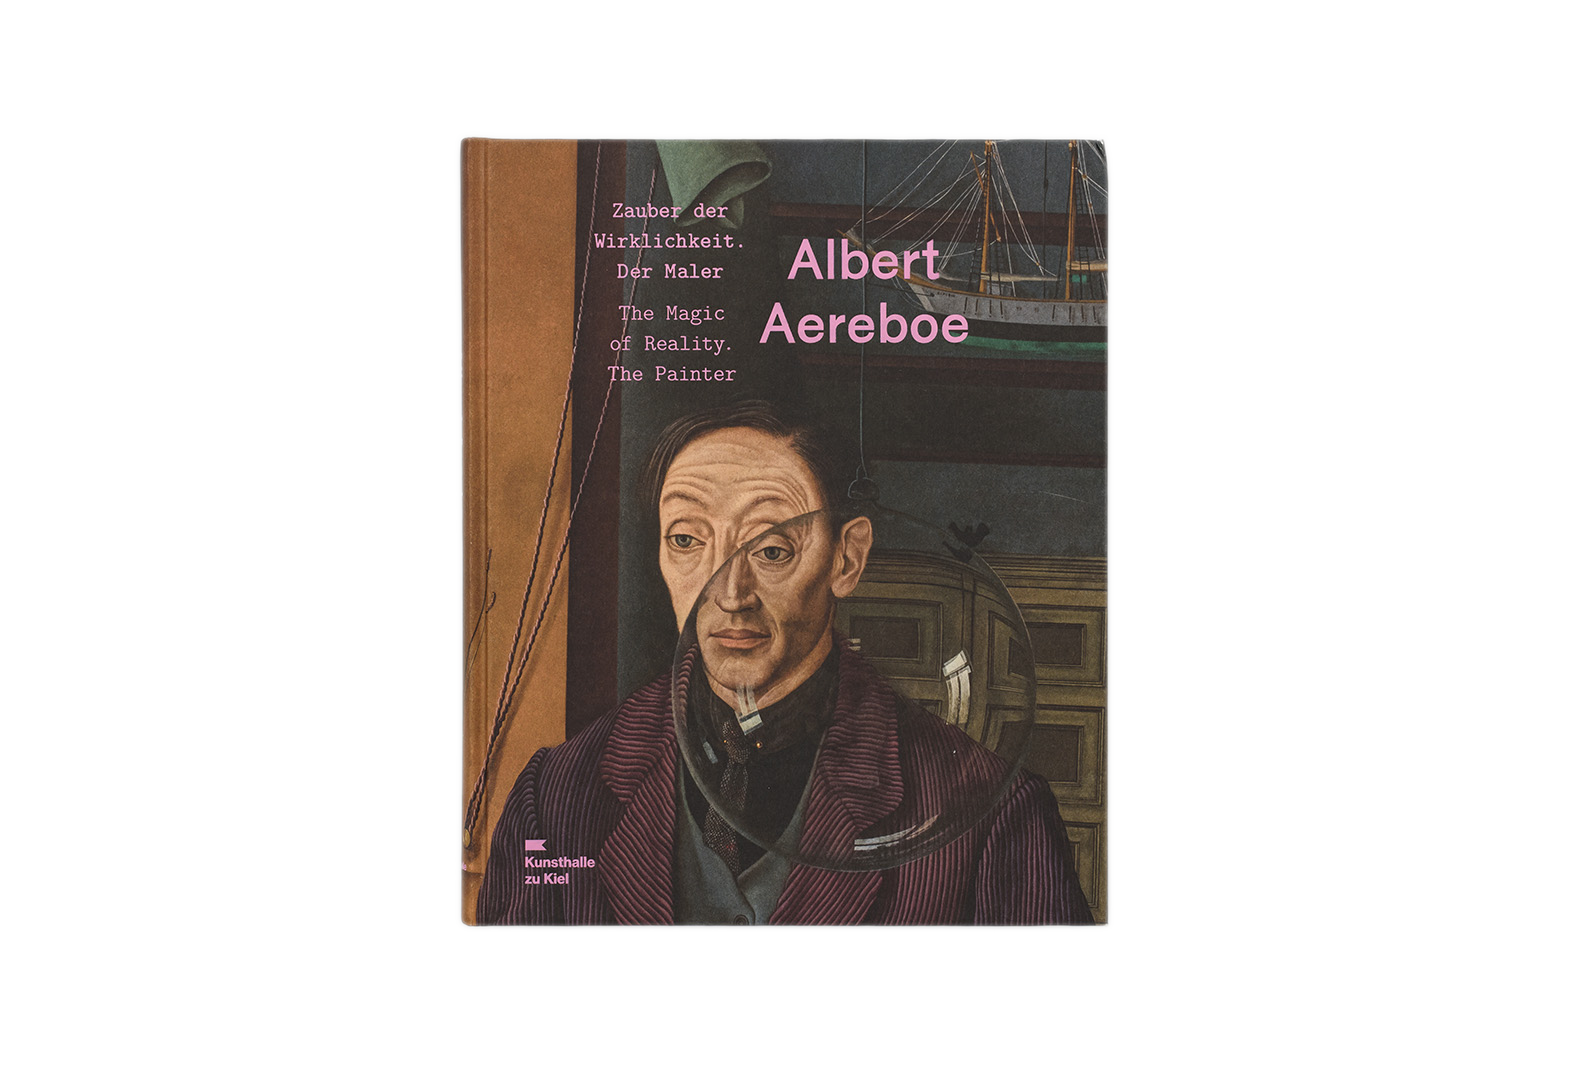 Albert Aereboe